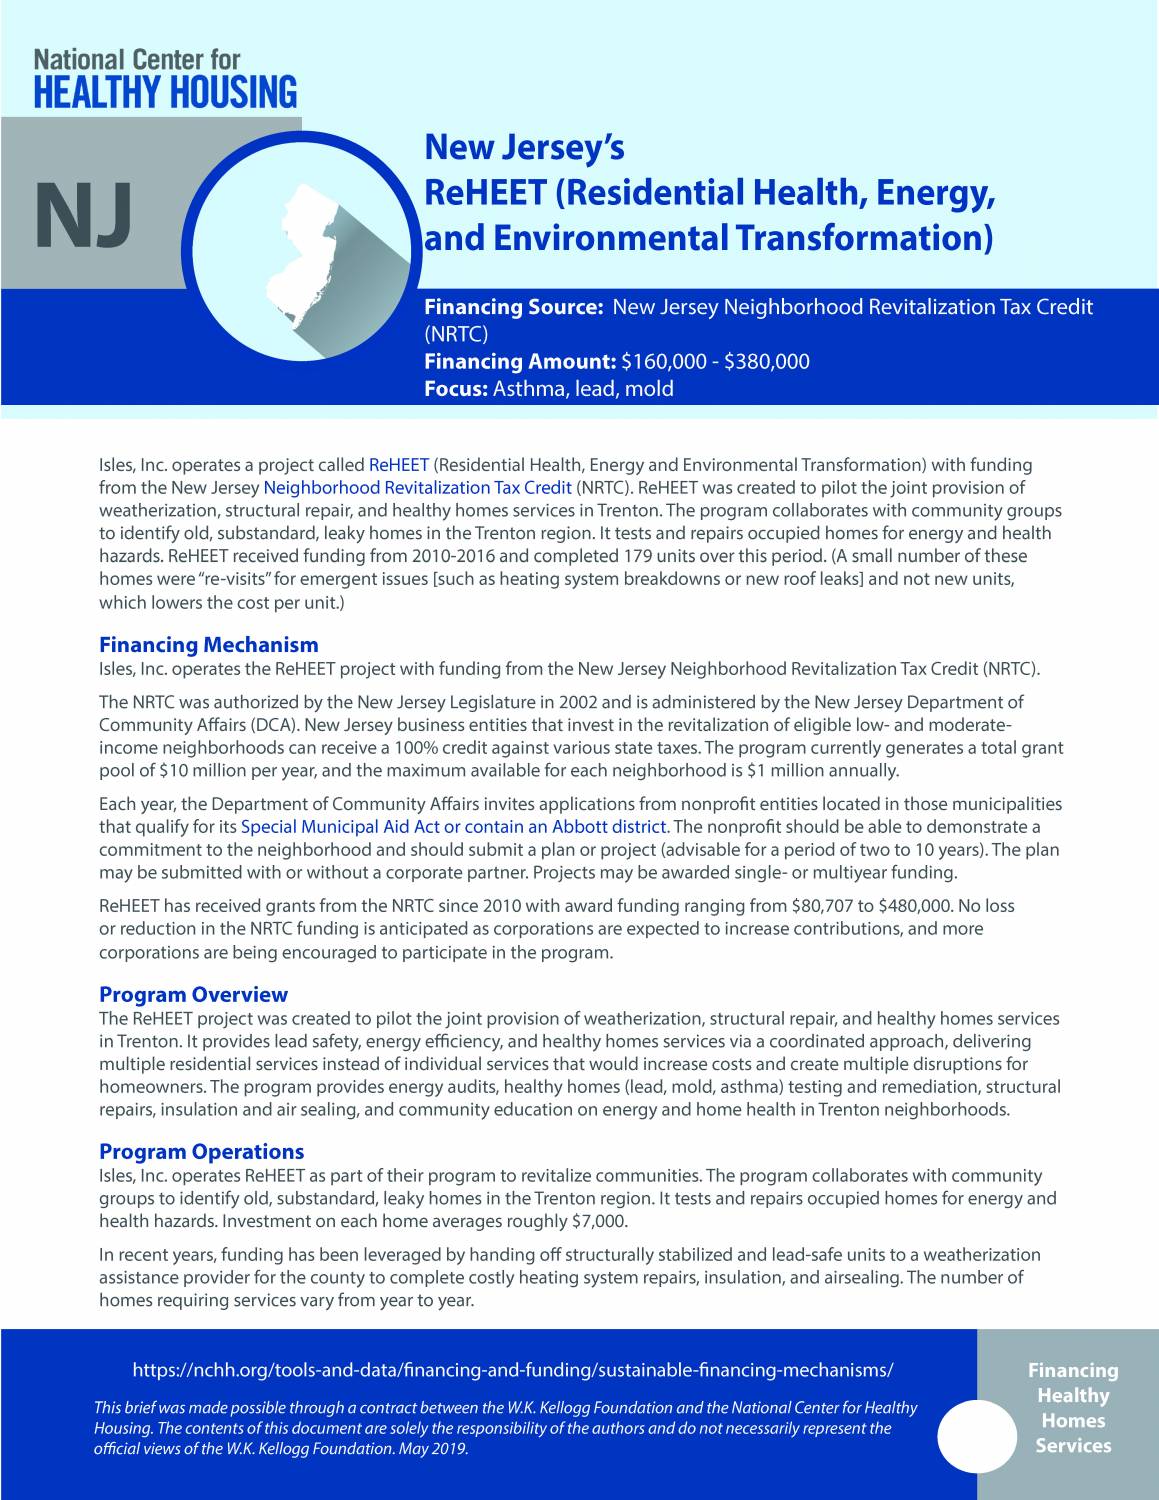 Sustainable Financing Mechanisms: New Jersey's ReHEET